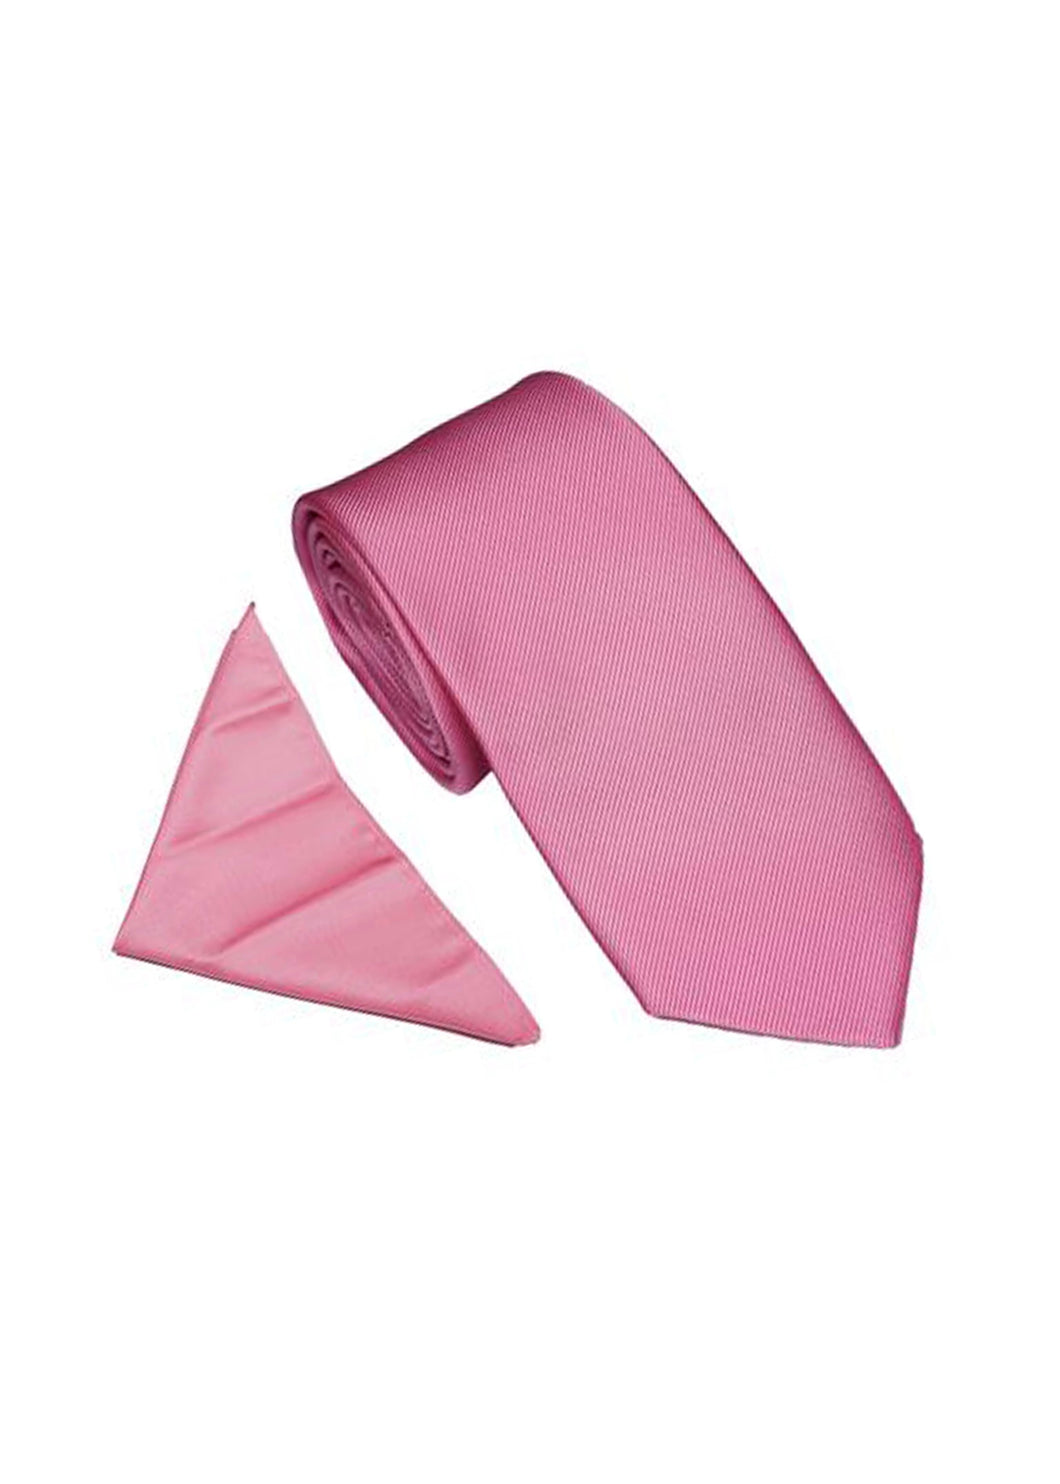 Twill Tie & Pocket Square Pink Wedding